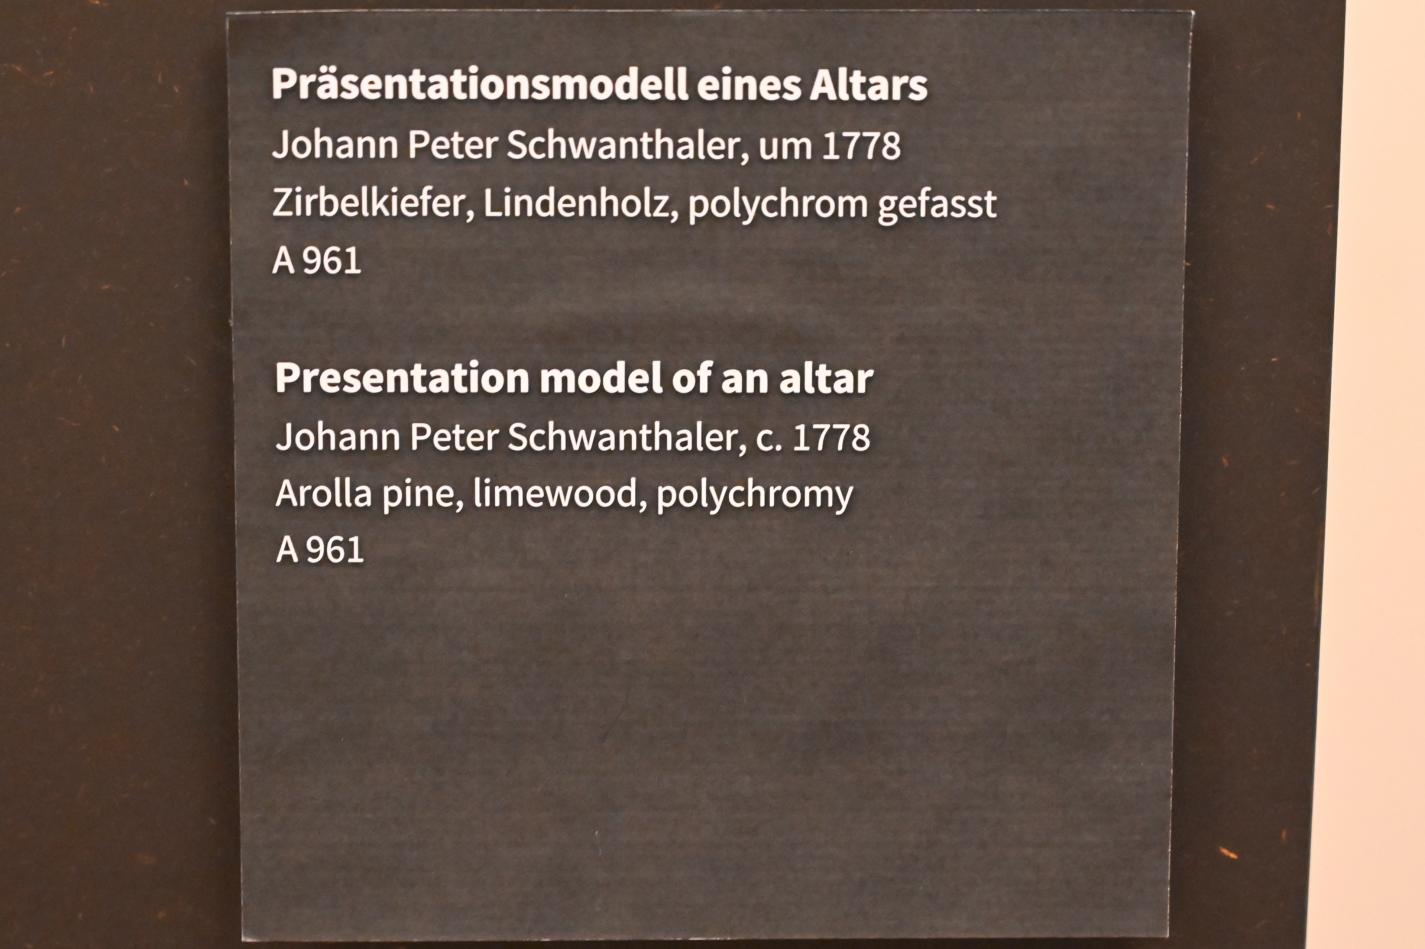 Johann Peter Schwanthaler der Ältere (1750–1778), Präsentationsmodell eines Altars, Köln, Museum Schnütgen, Saal 12, um 1778, Bild 2/2